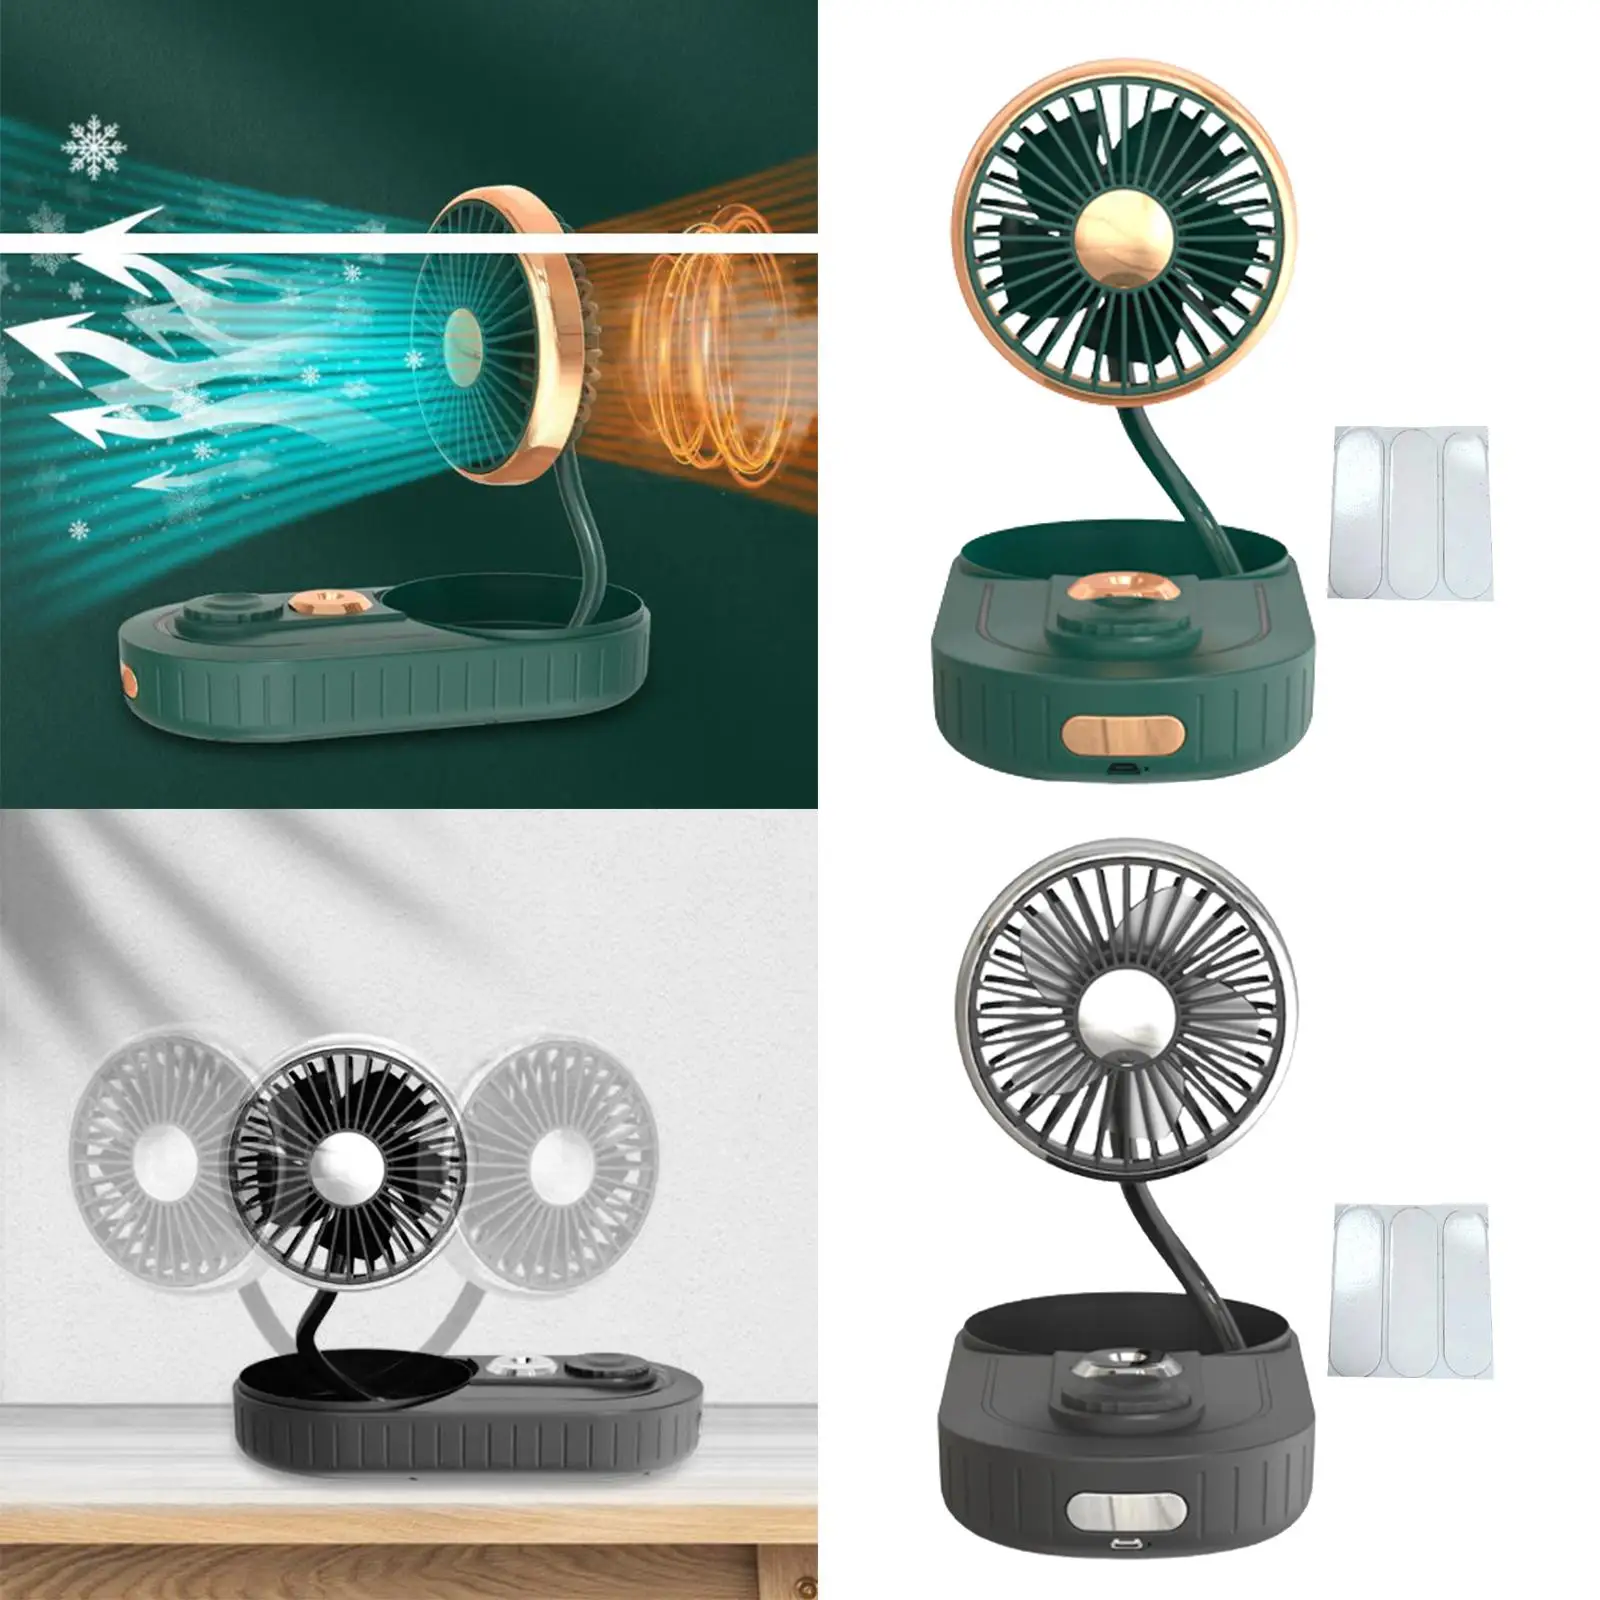 USB Fan Humidifier Dashboard Summer Air Circulation Fans Fits for Desktop Office